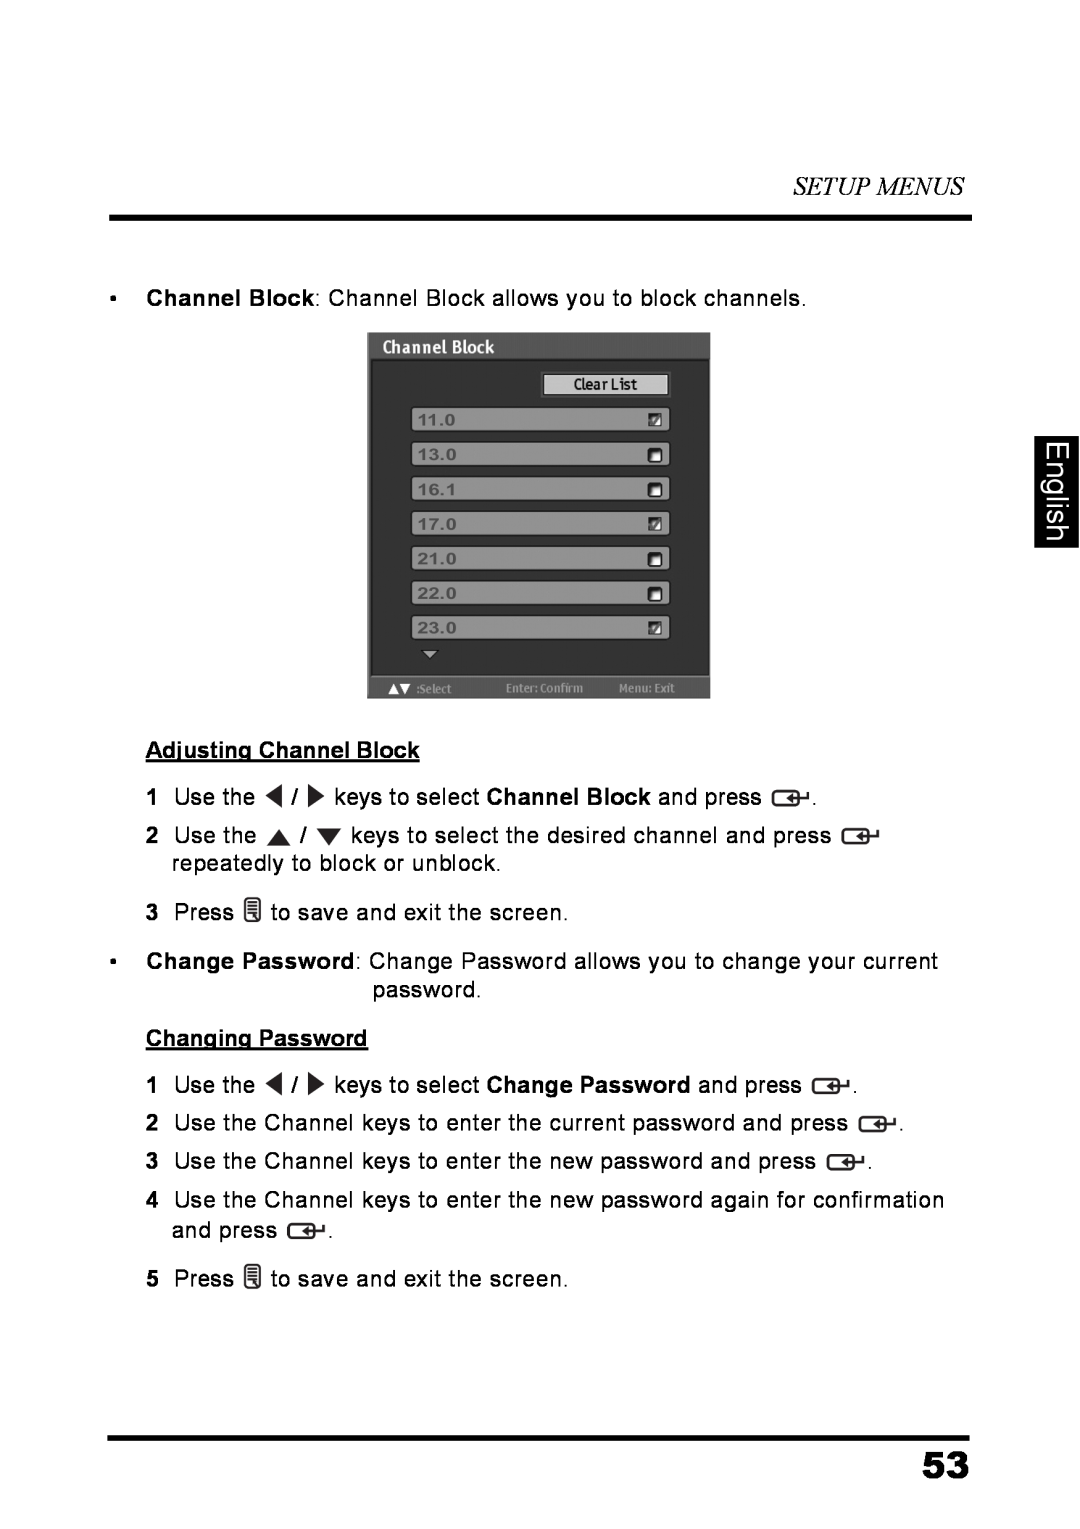 Westinghouse LD-3237 user manual English, Setup Menus, Adjusting Channel Block, Changing Password 